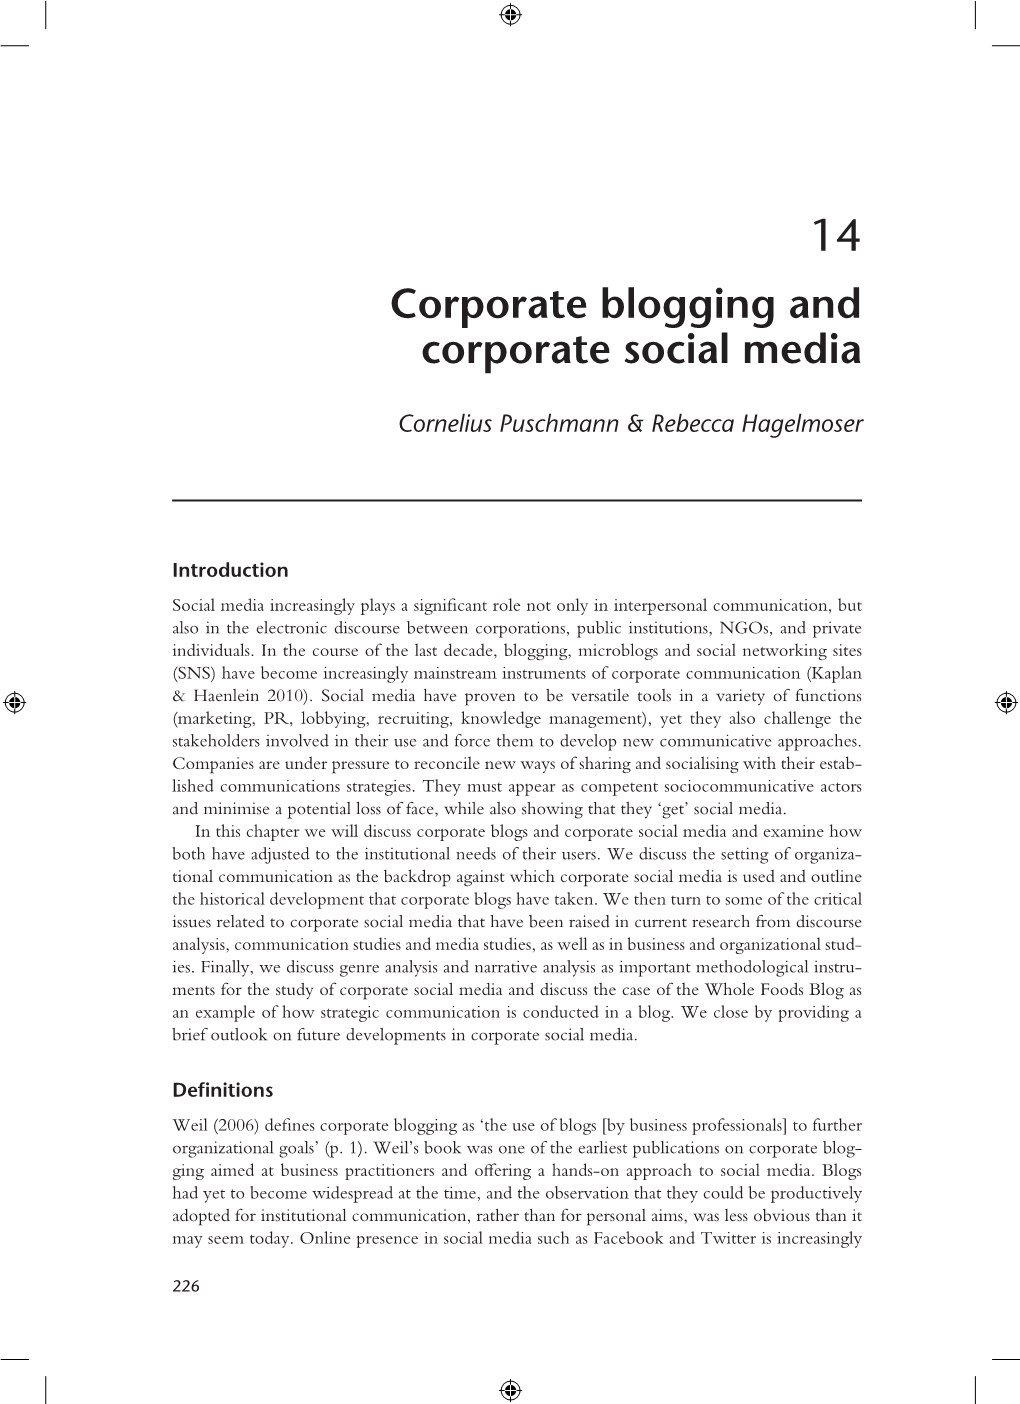 Corporate Blogging and Corporate Social Media